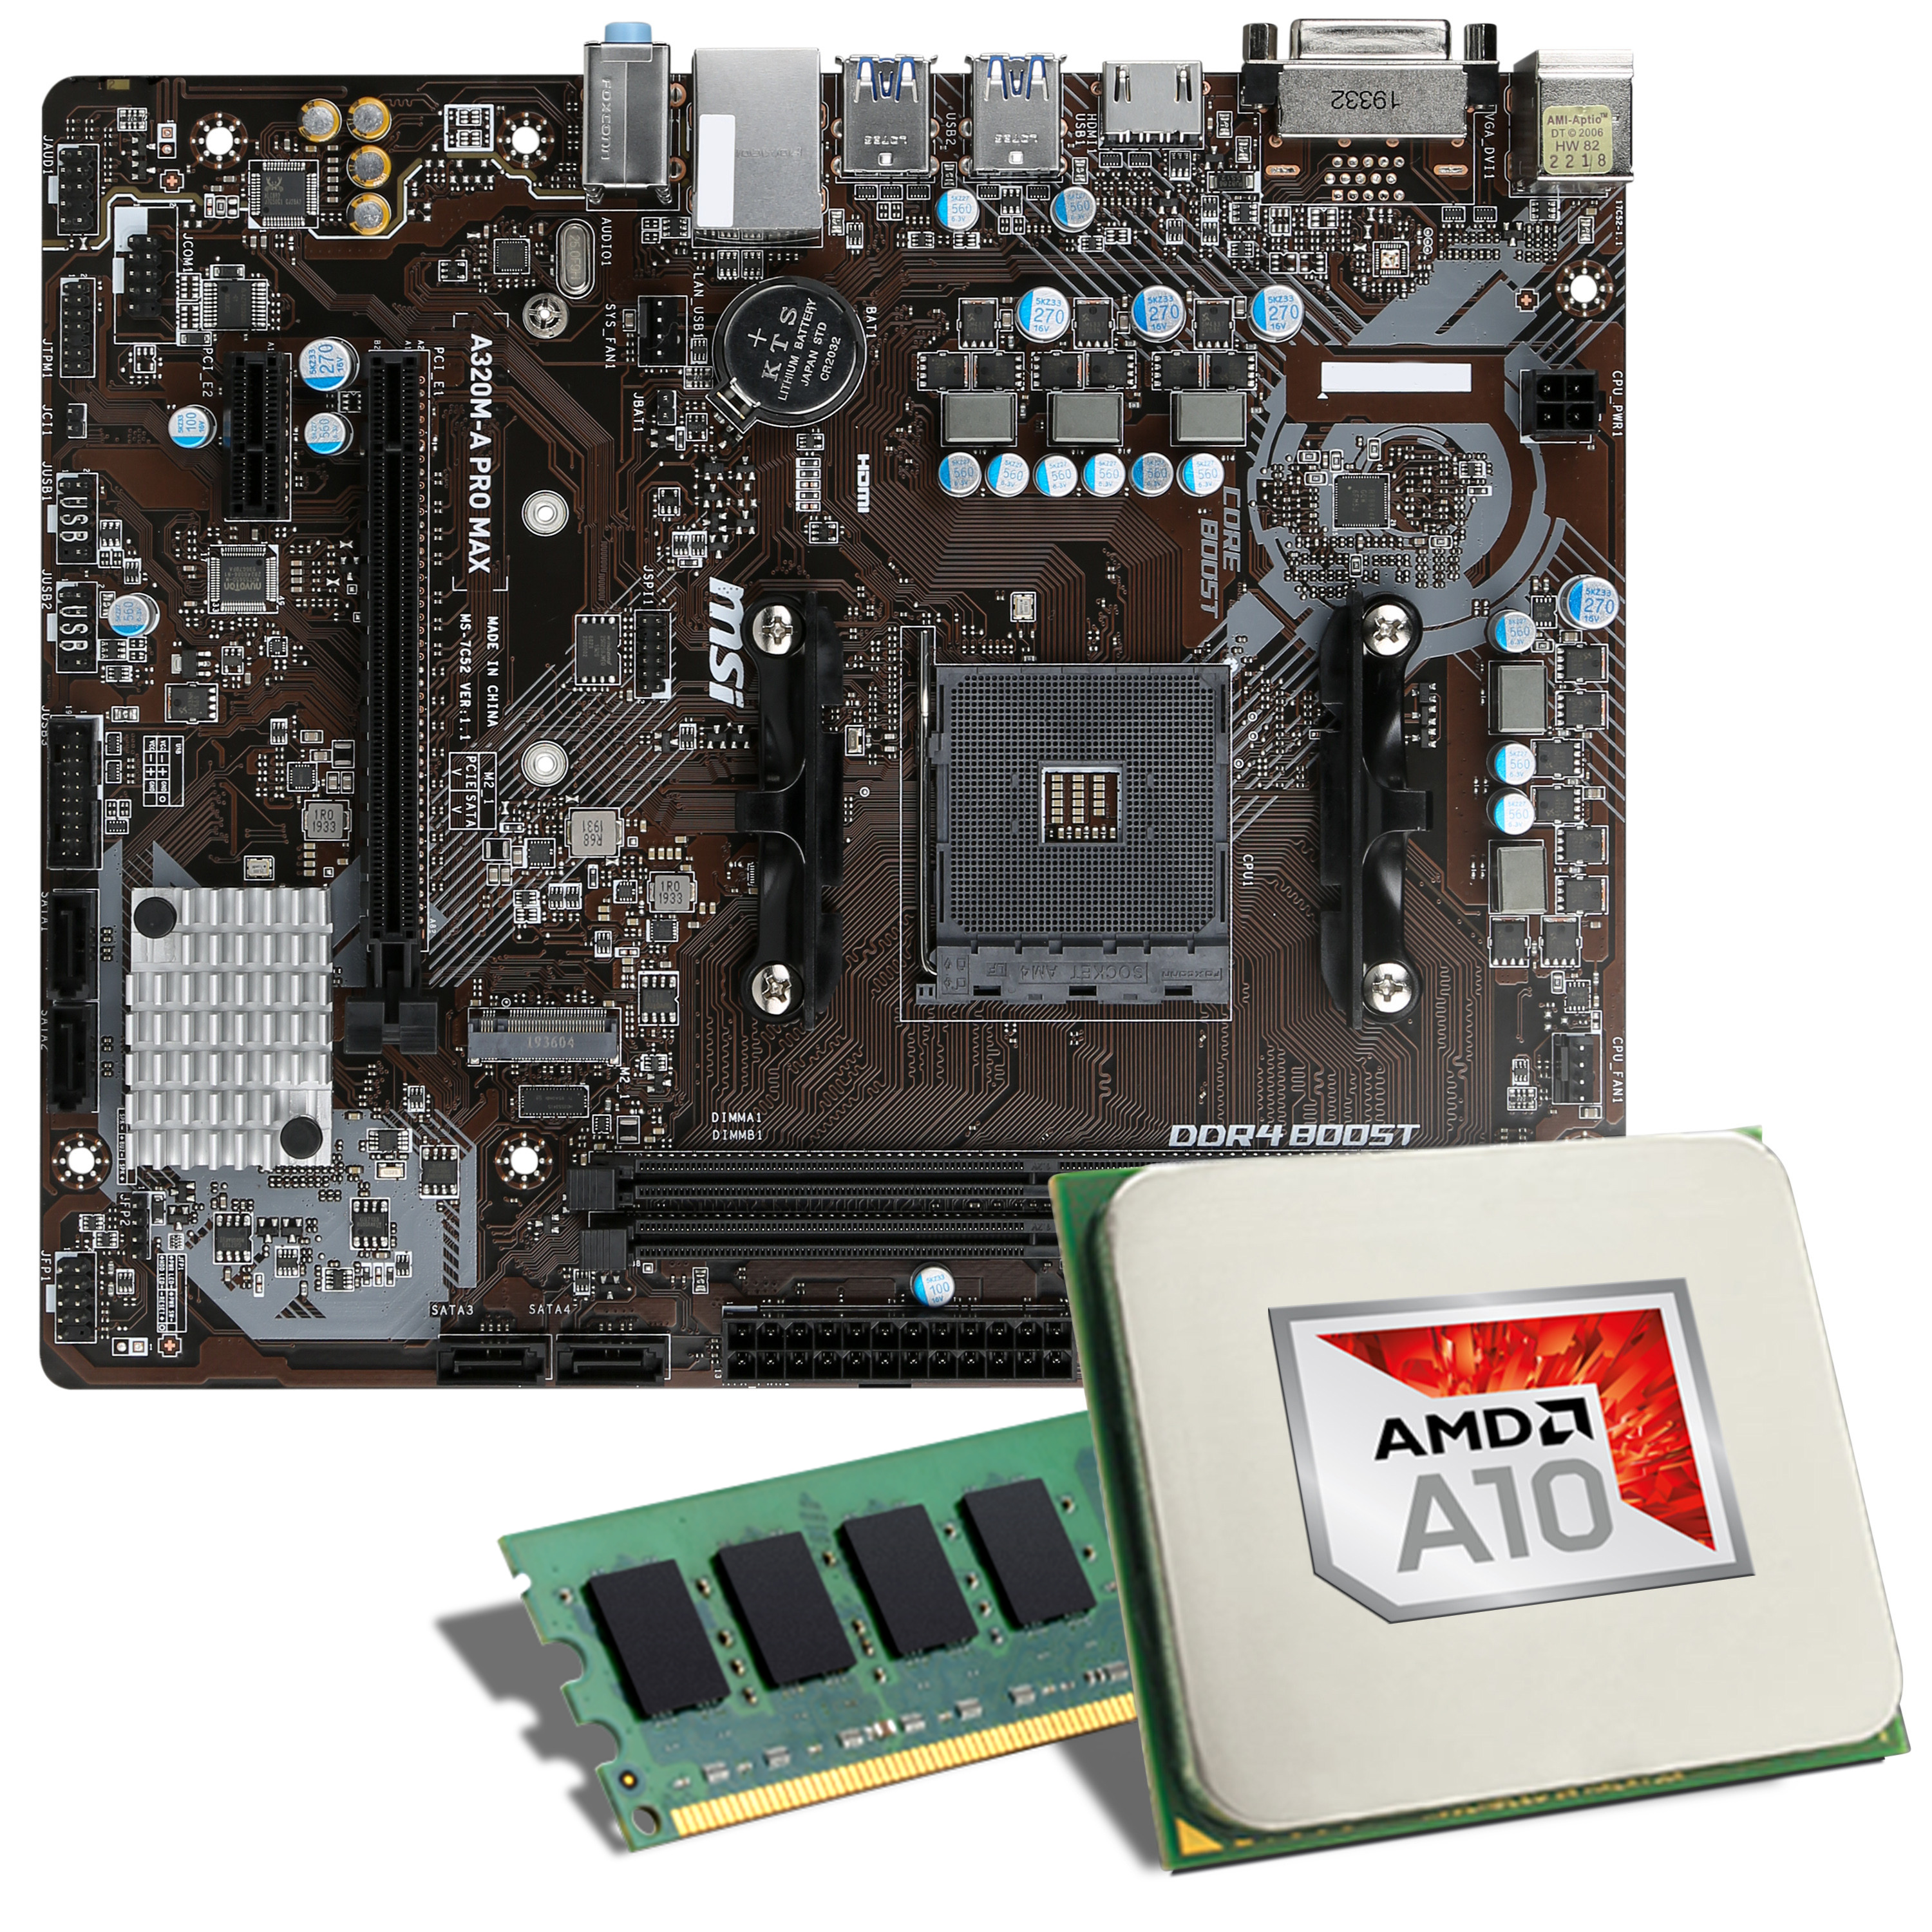 AMD a10-9700 Radeon r7, 10 Compute Cores 4c+6g 3.50 GHZ. AMD a8-9600 Radeon r7, 10 Compute Cores 4c+6g. AMD Radeon a8 9600. AMD a10-9700 Radeon r7, 10 Compute Cores 4c+6g.